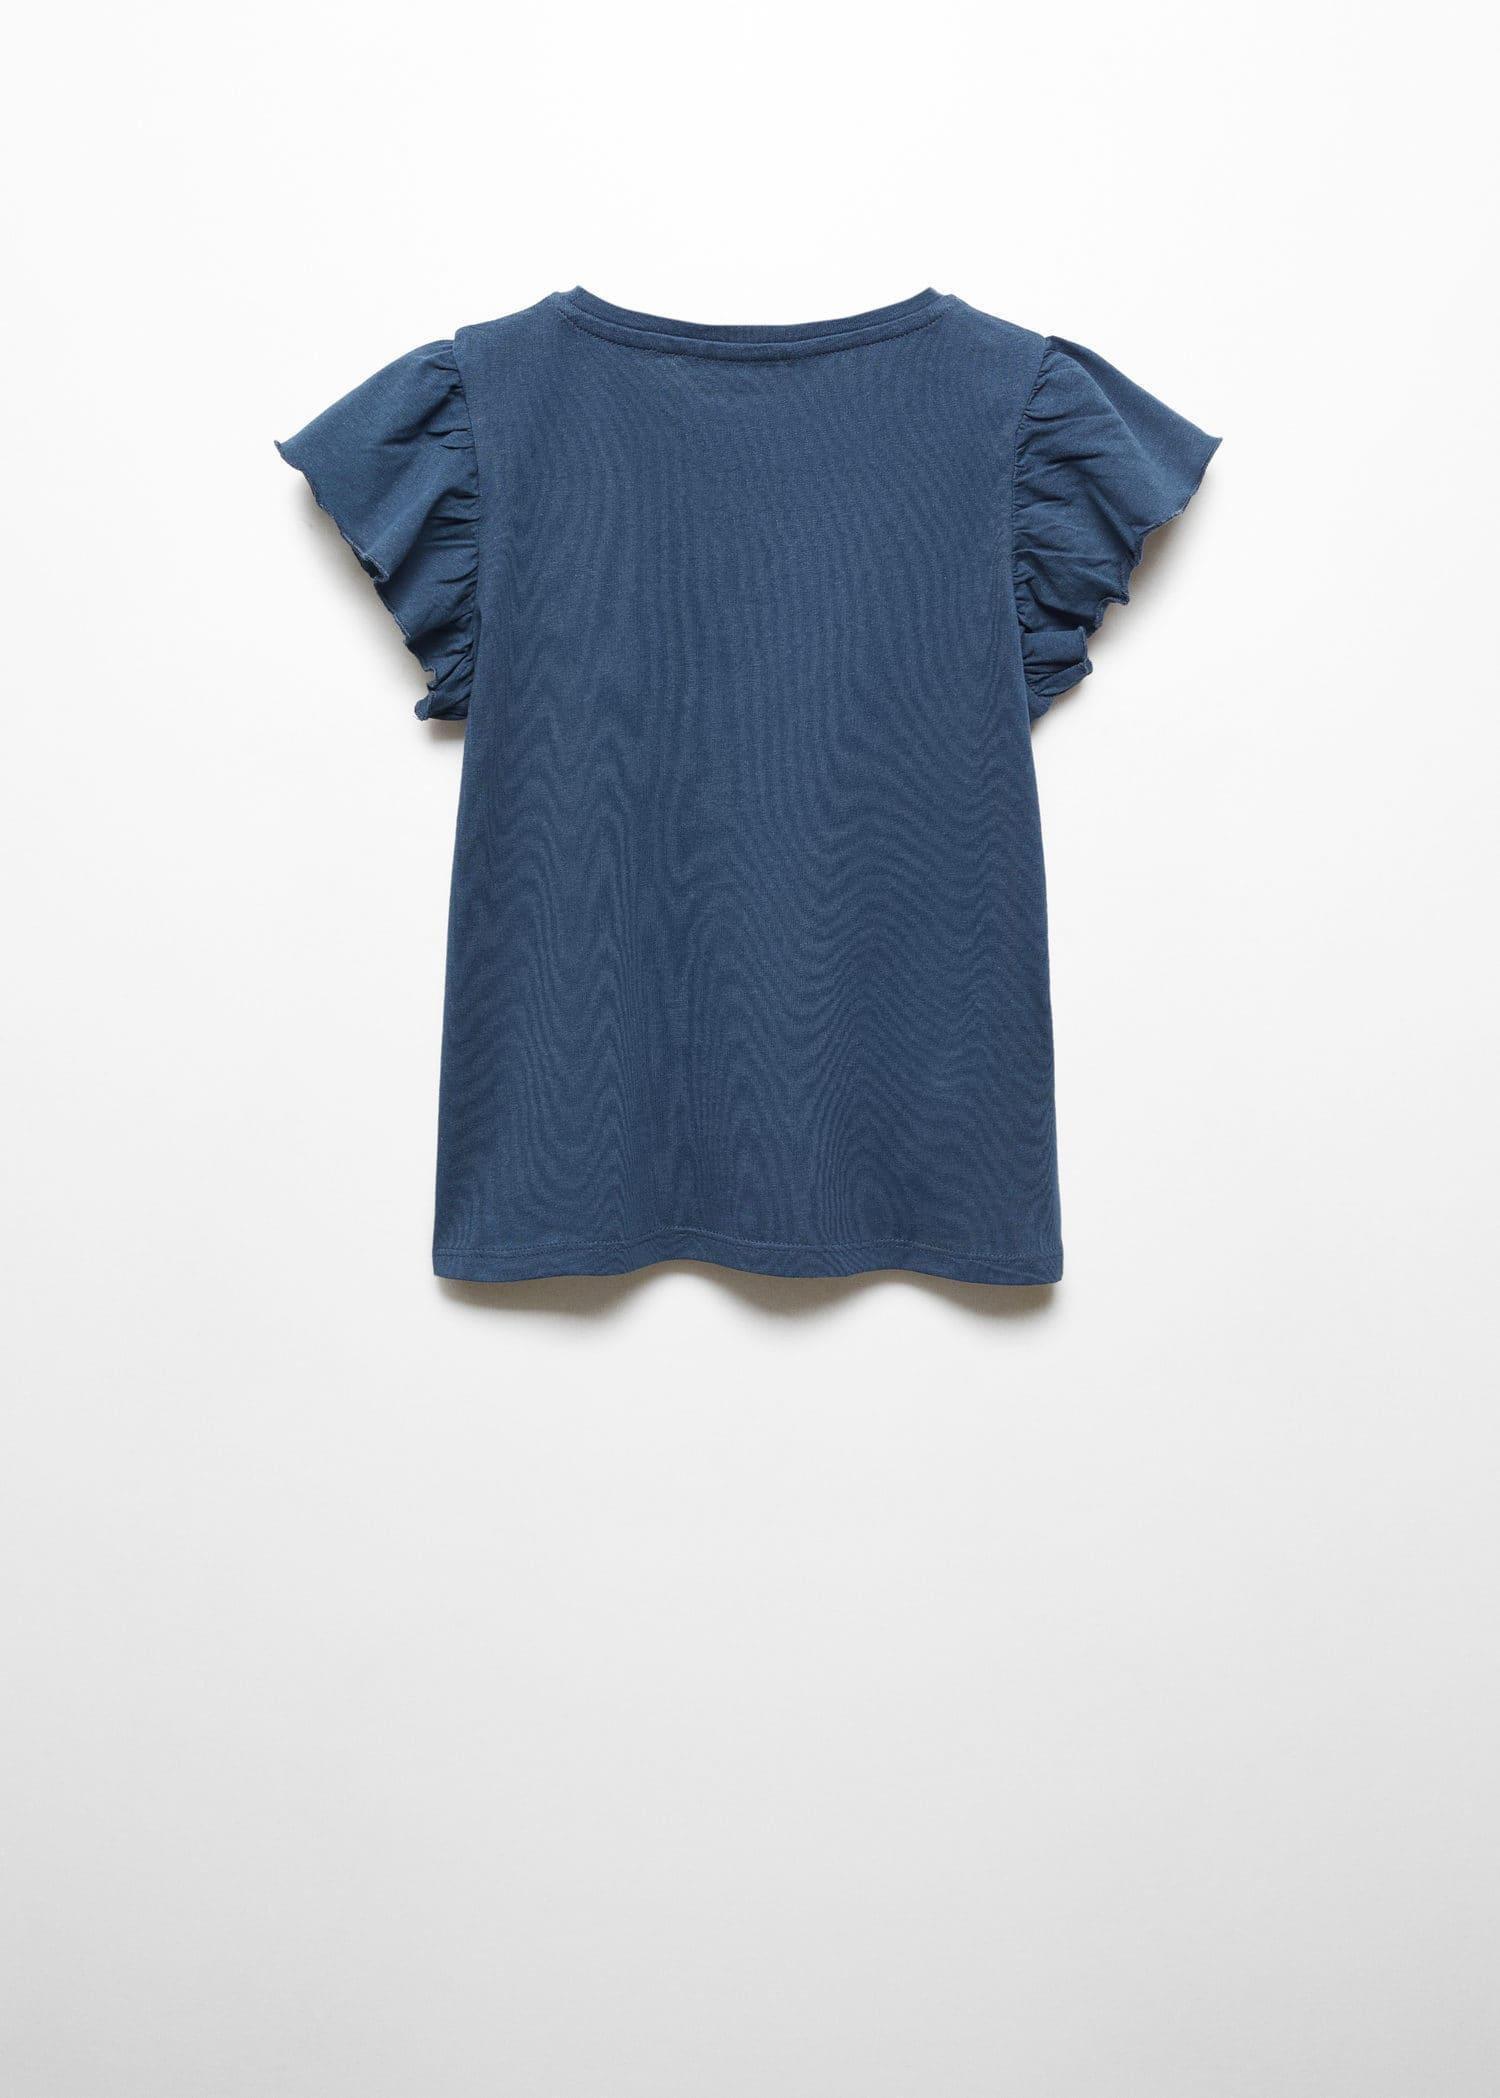 Mango - Navy Short-Sleeved Ruffle T-Shirt, Kids Girls